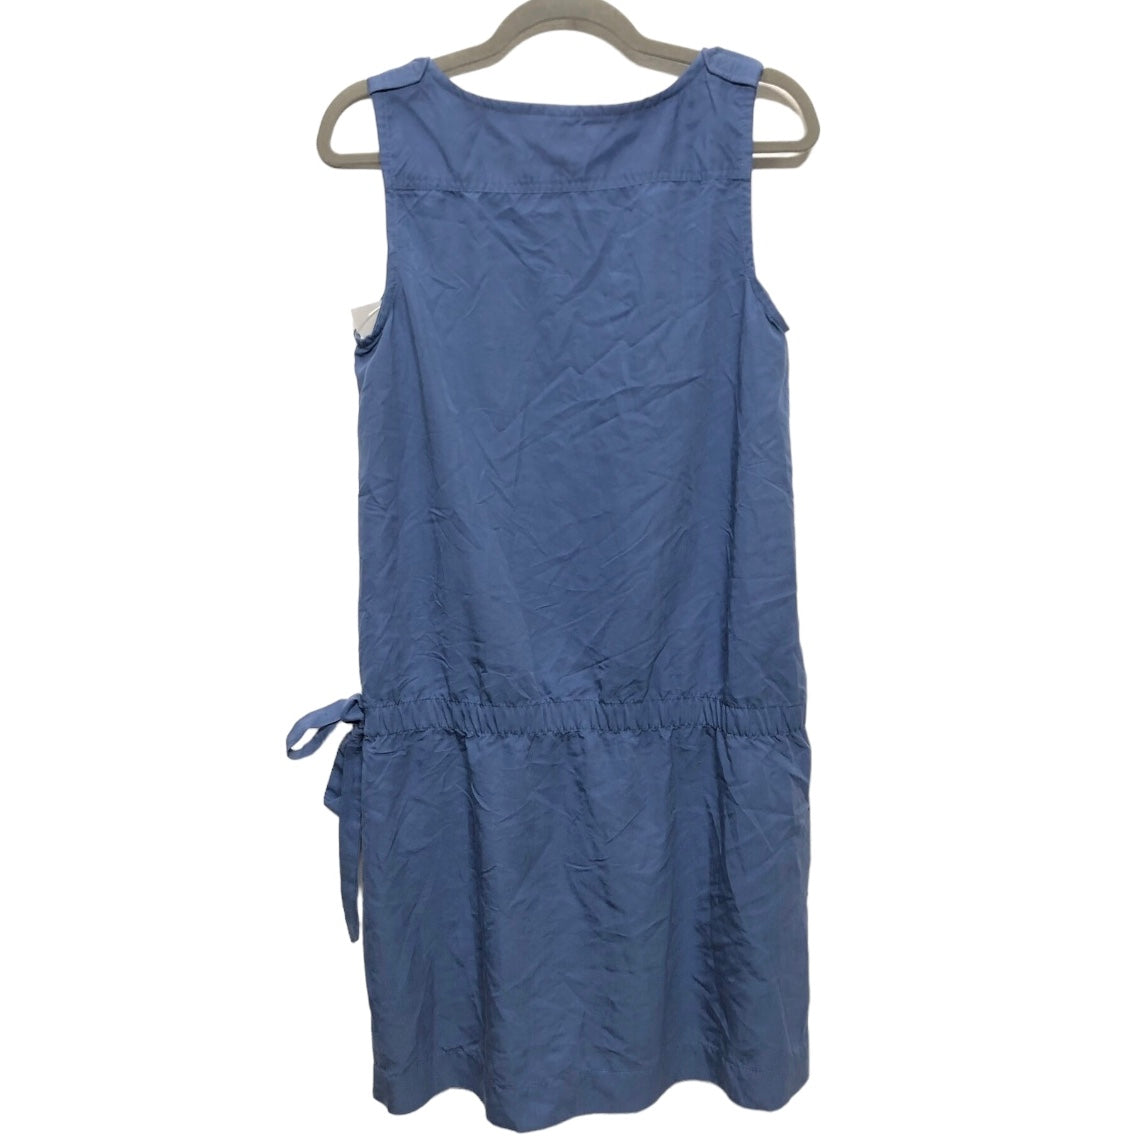 Blue Dress Casual Short Tommy Hilfiger, Size M